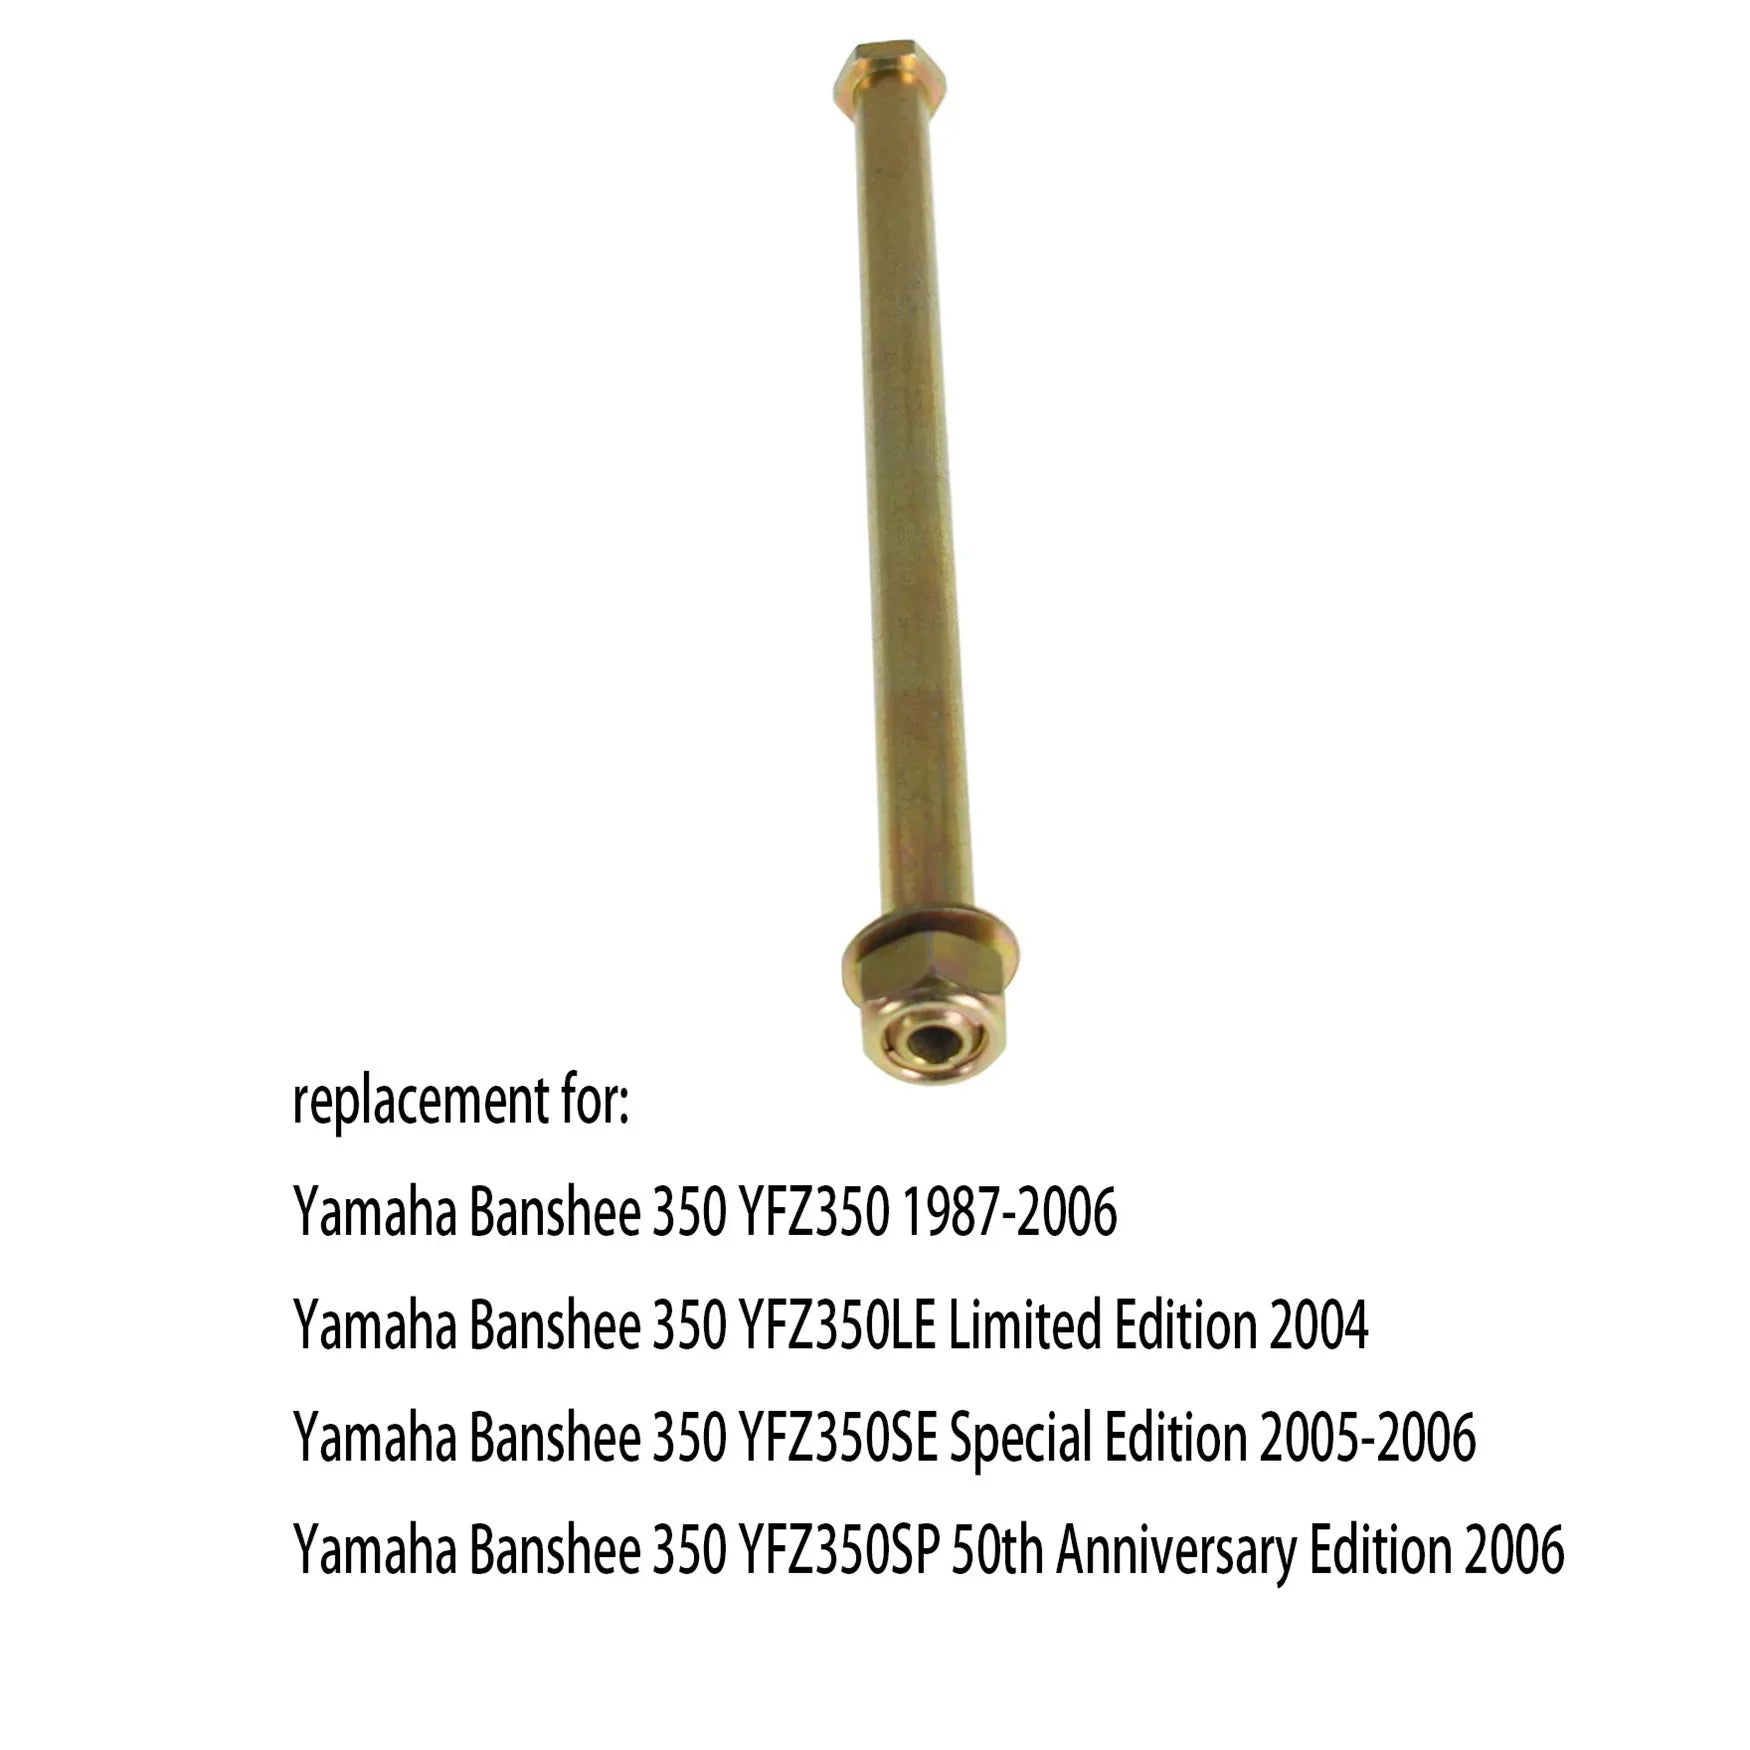 labwork 2GU-22141-00-00 Swingarm Pivot Bolt Nut Washer Replacement for Yamaha Banshee 350 1987-2006 90201-244A9-00 90185-16127-00 LAB WORK MOTO